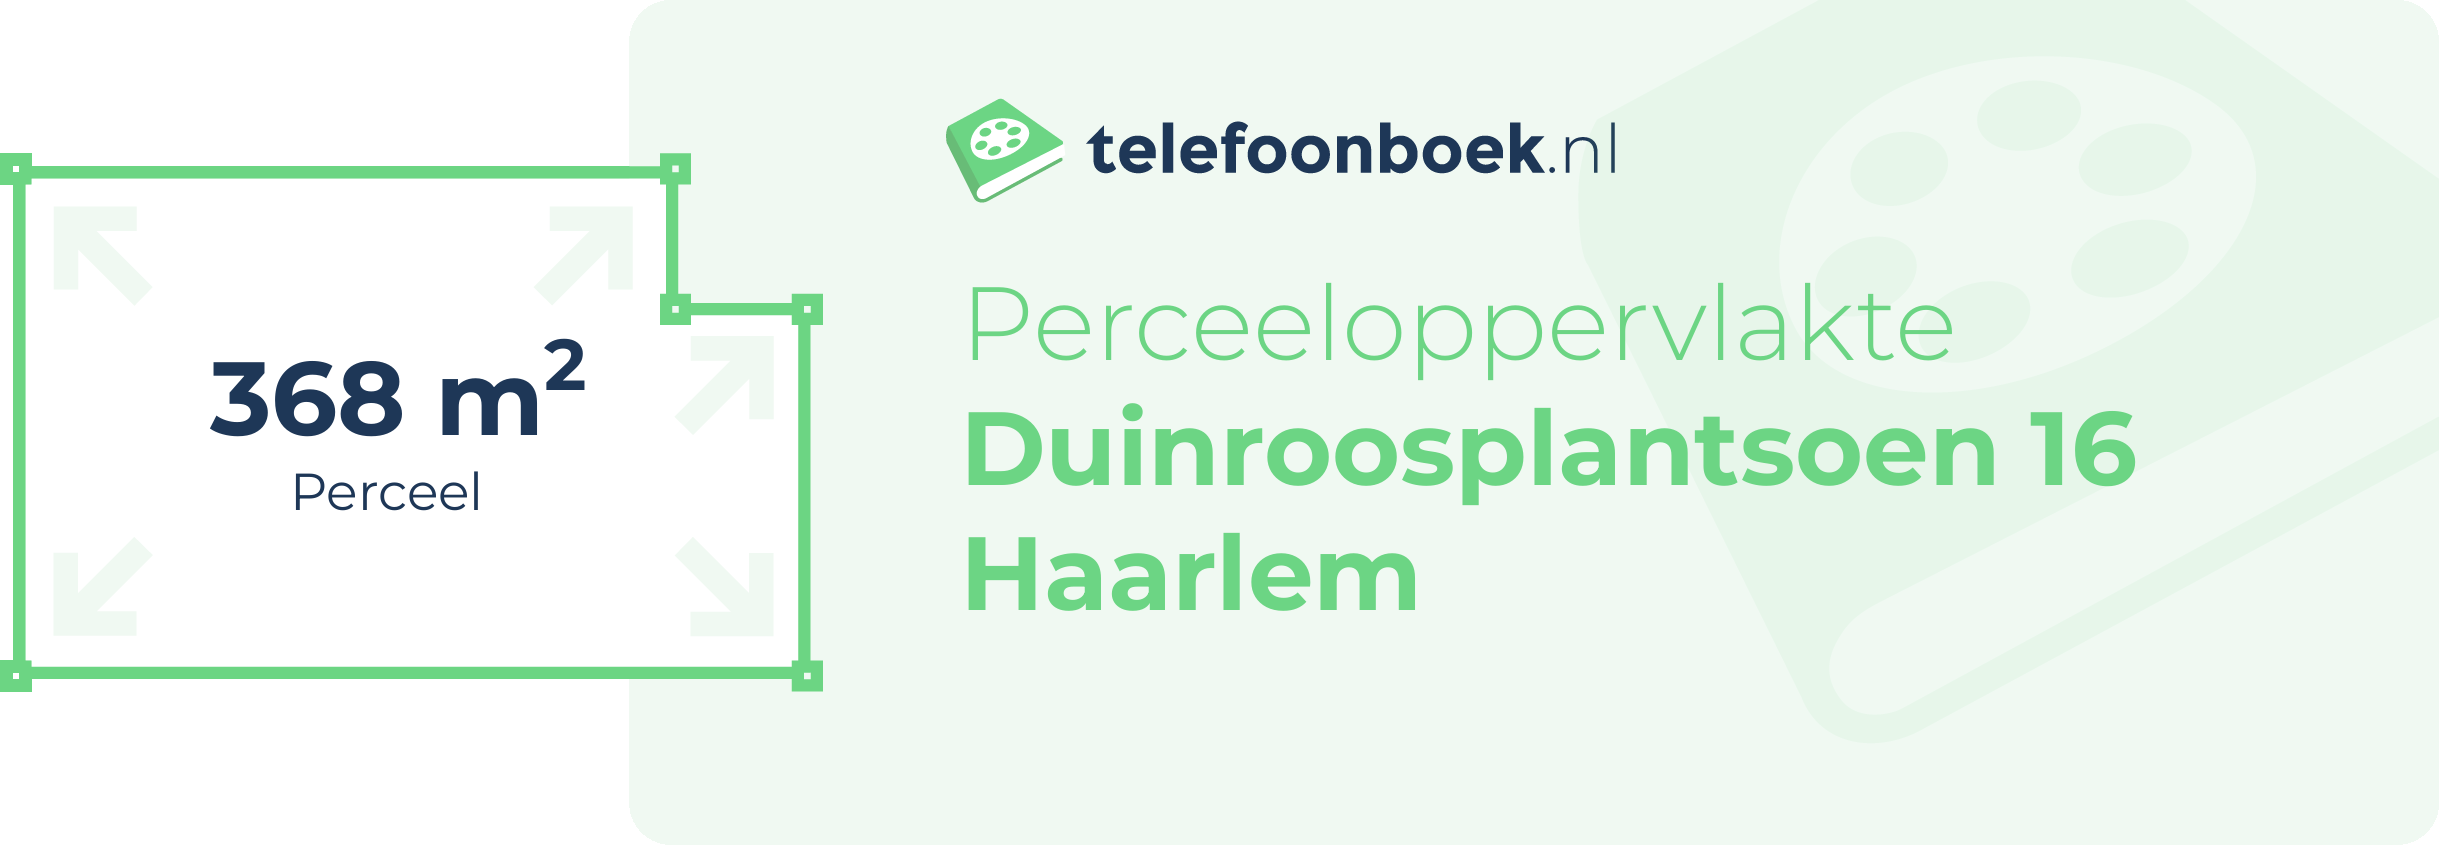 Perceeloppervlakte Duinroosplantsoen 16 Haarlem